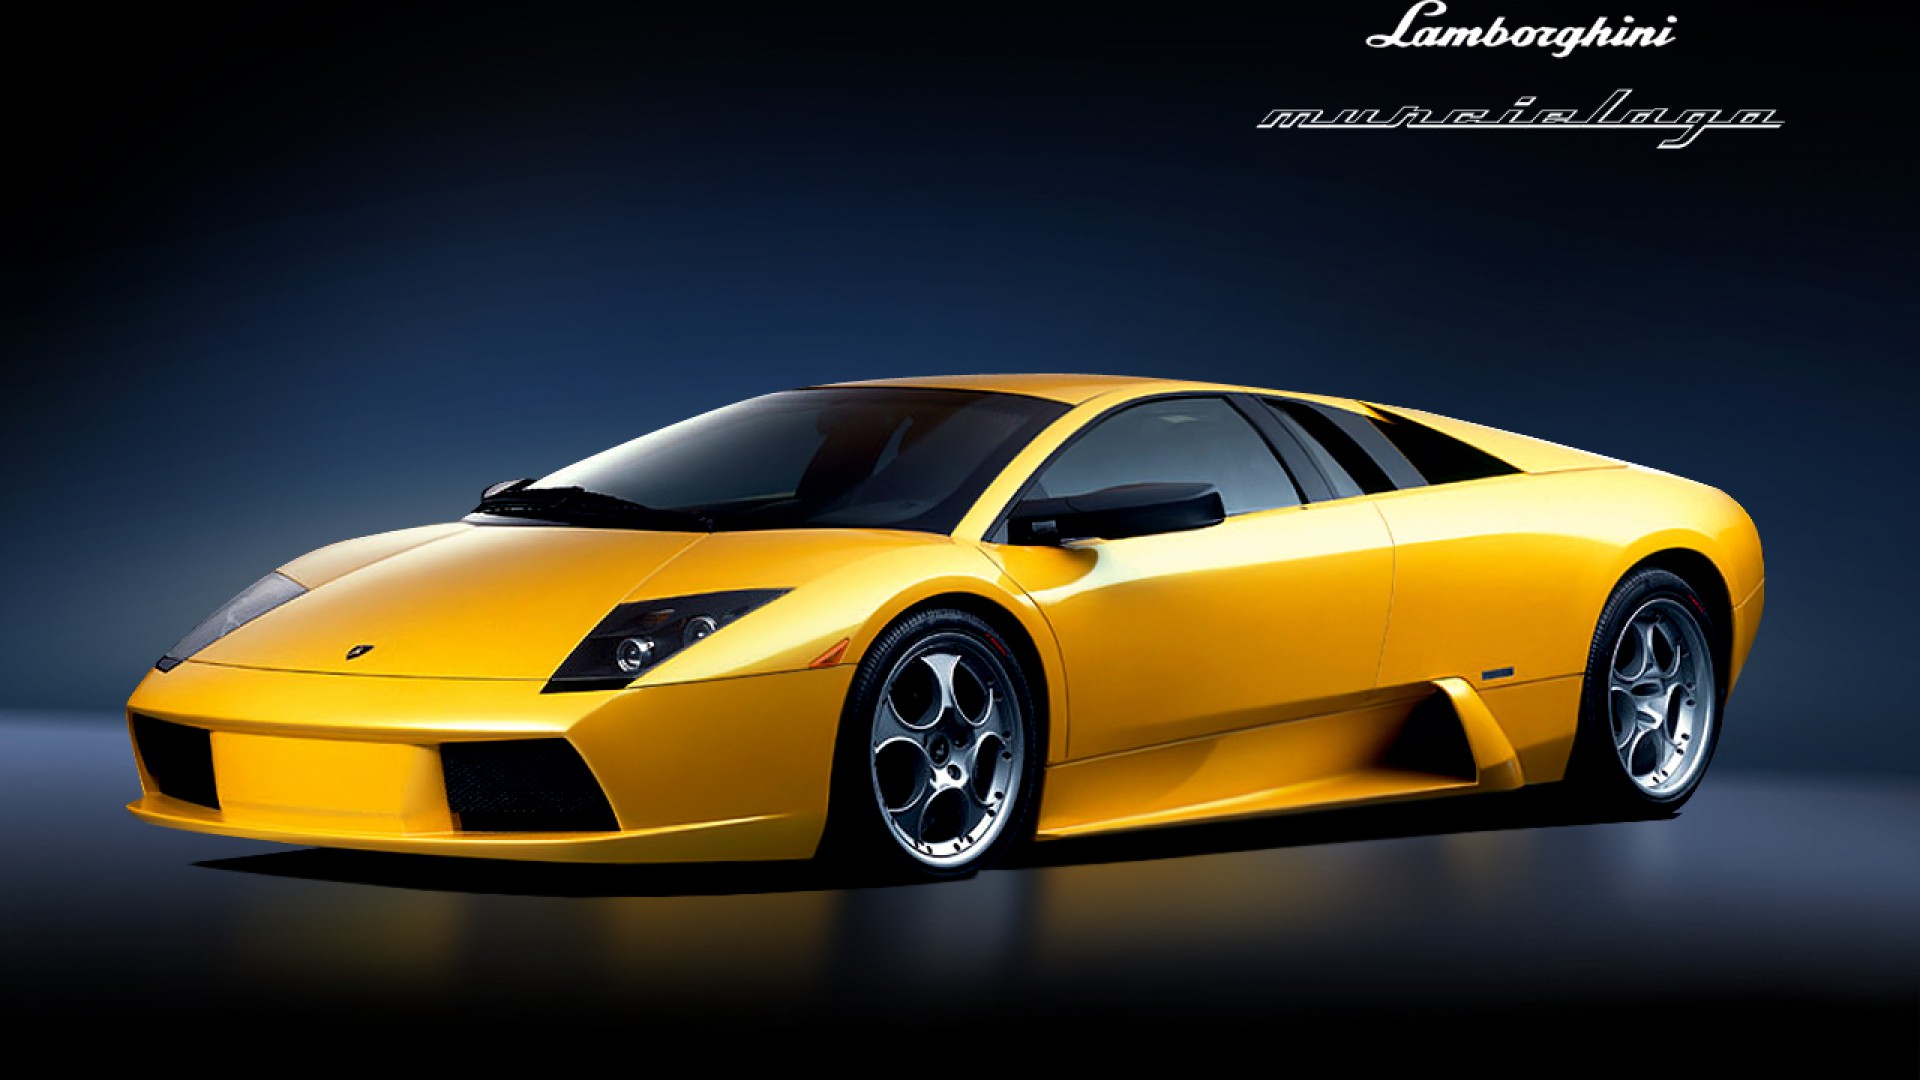 Lamborghini Murciélago HD wallpapers, Desktop wallpaper - most viewed